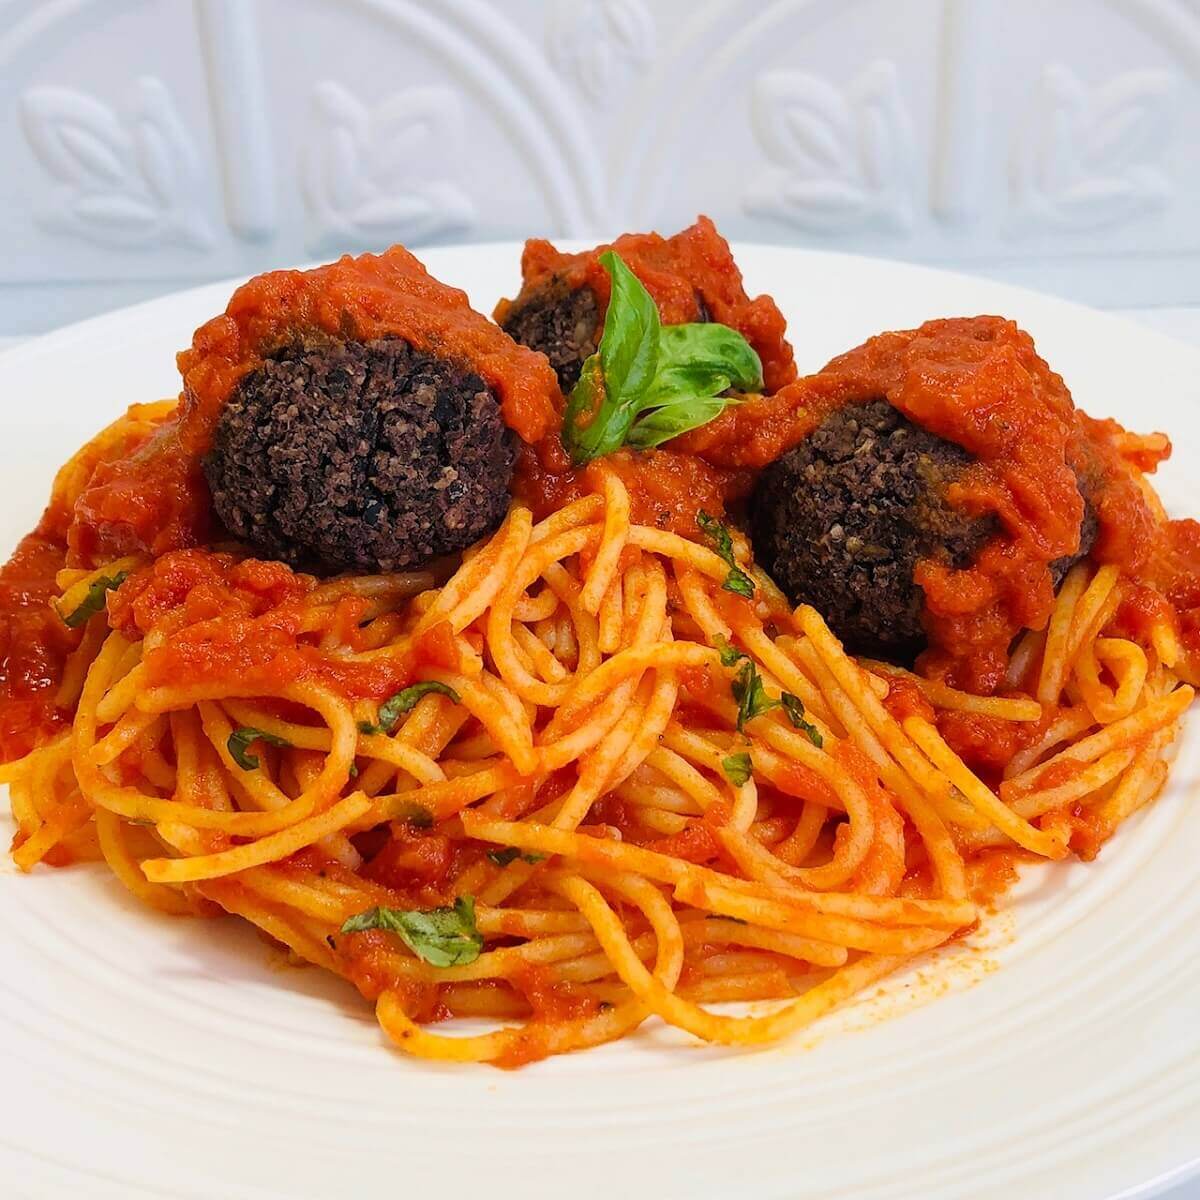 Three vegan meatballs on a plate of spaghetti with tomato sauce.